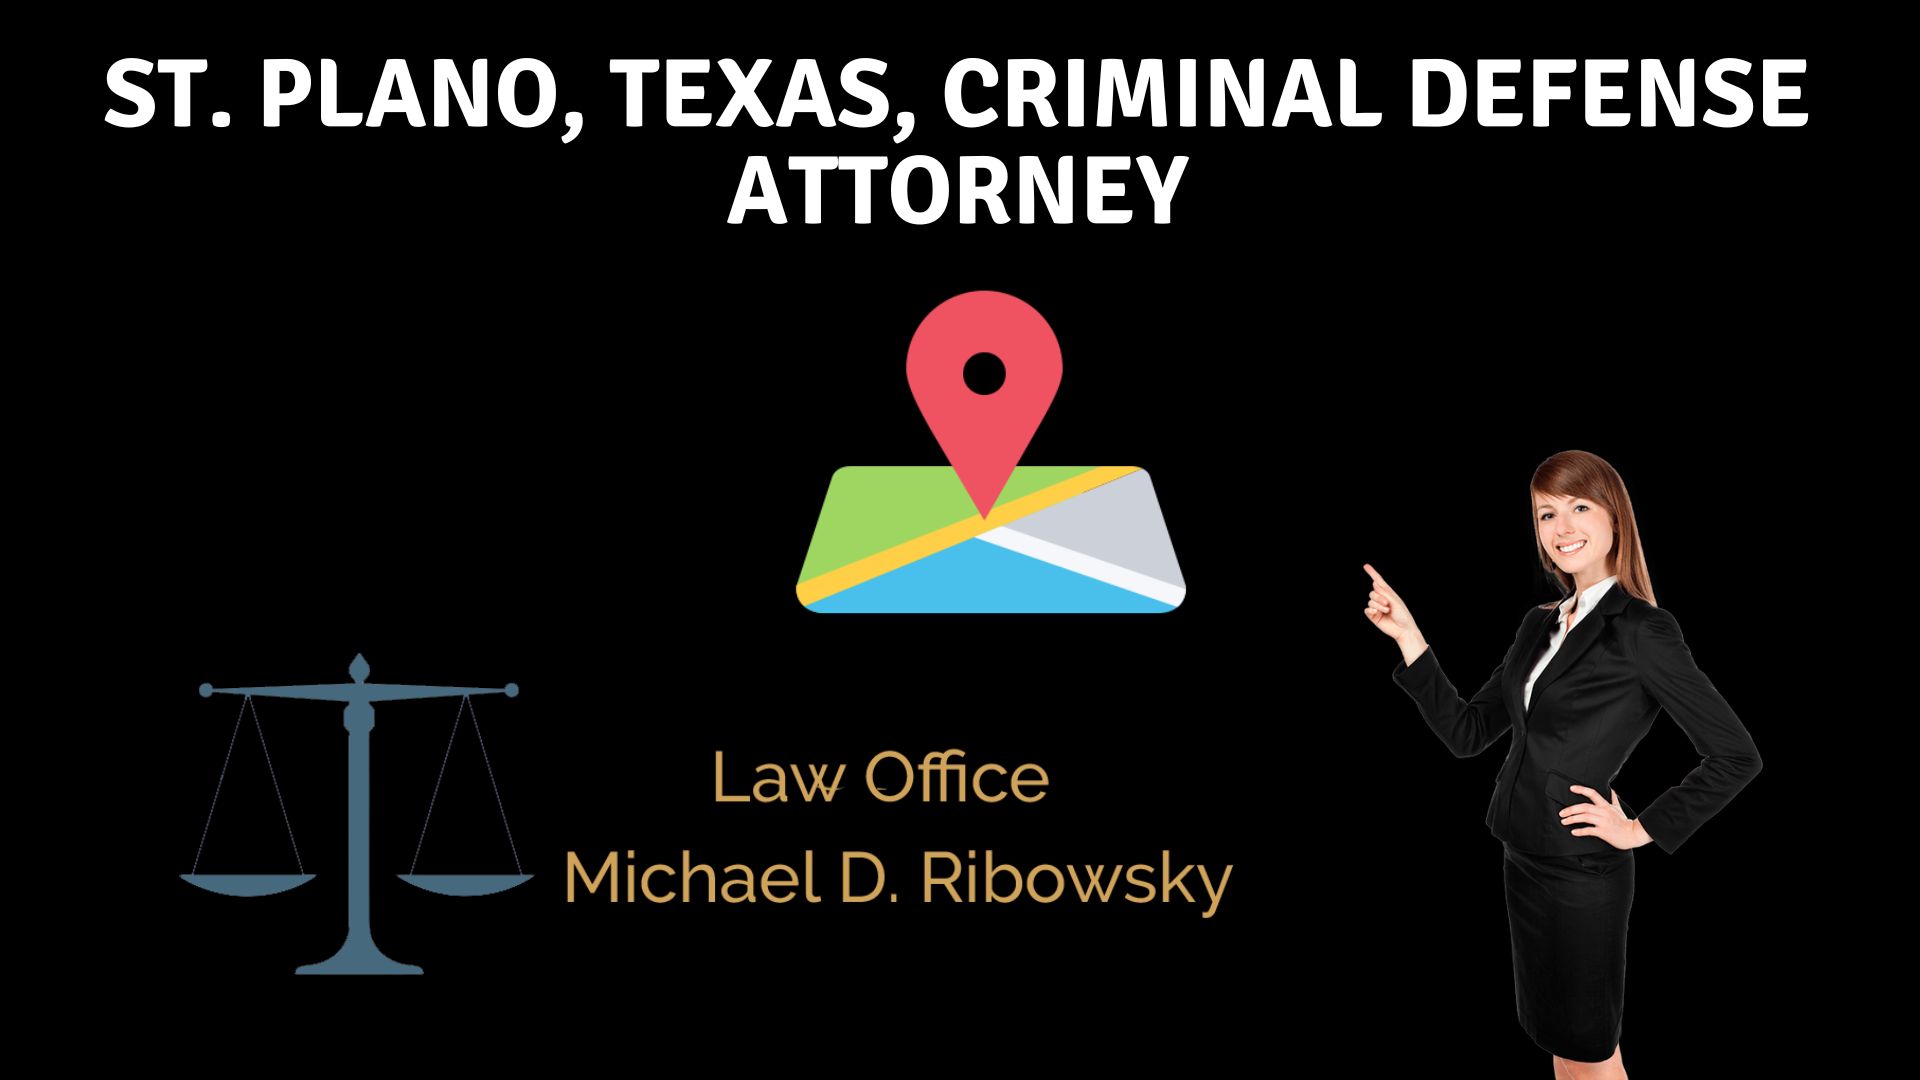 St. Plano, texas, criminal defense attorney